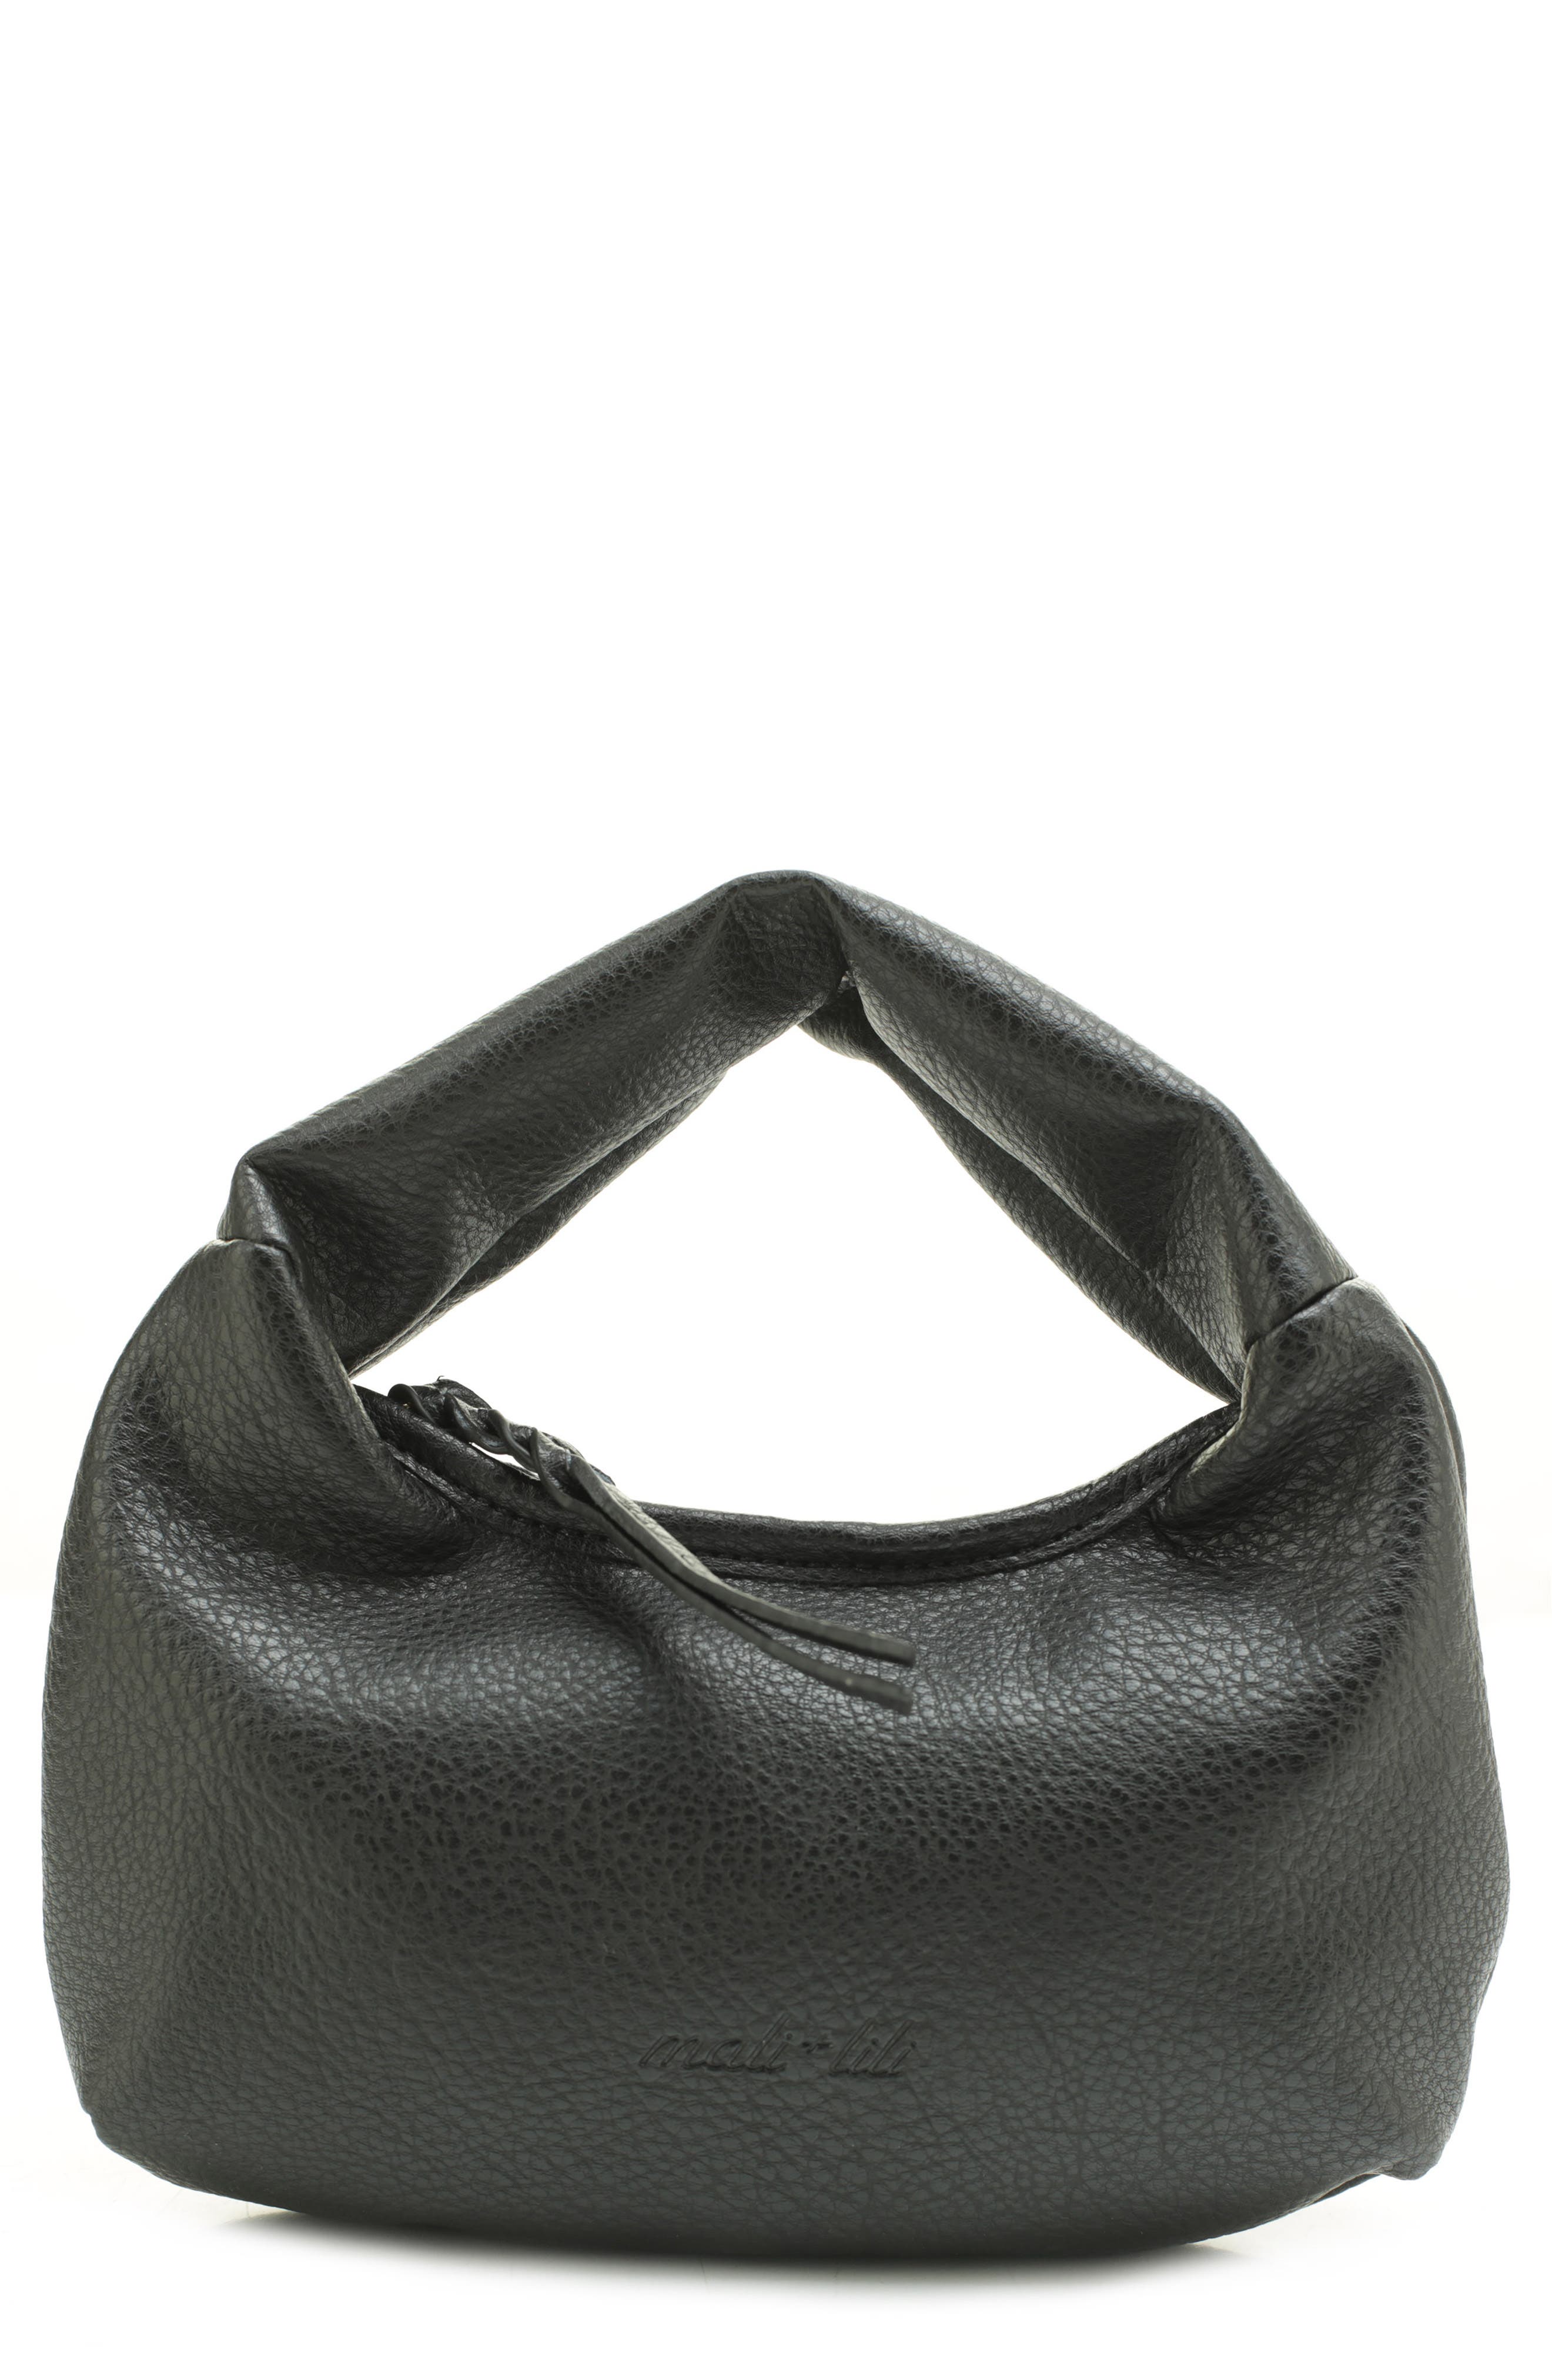 Black Pebble Grain peta-approved Vegan Leather Handbag 